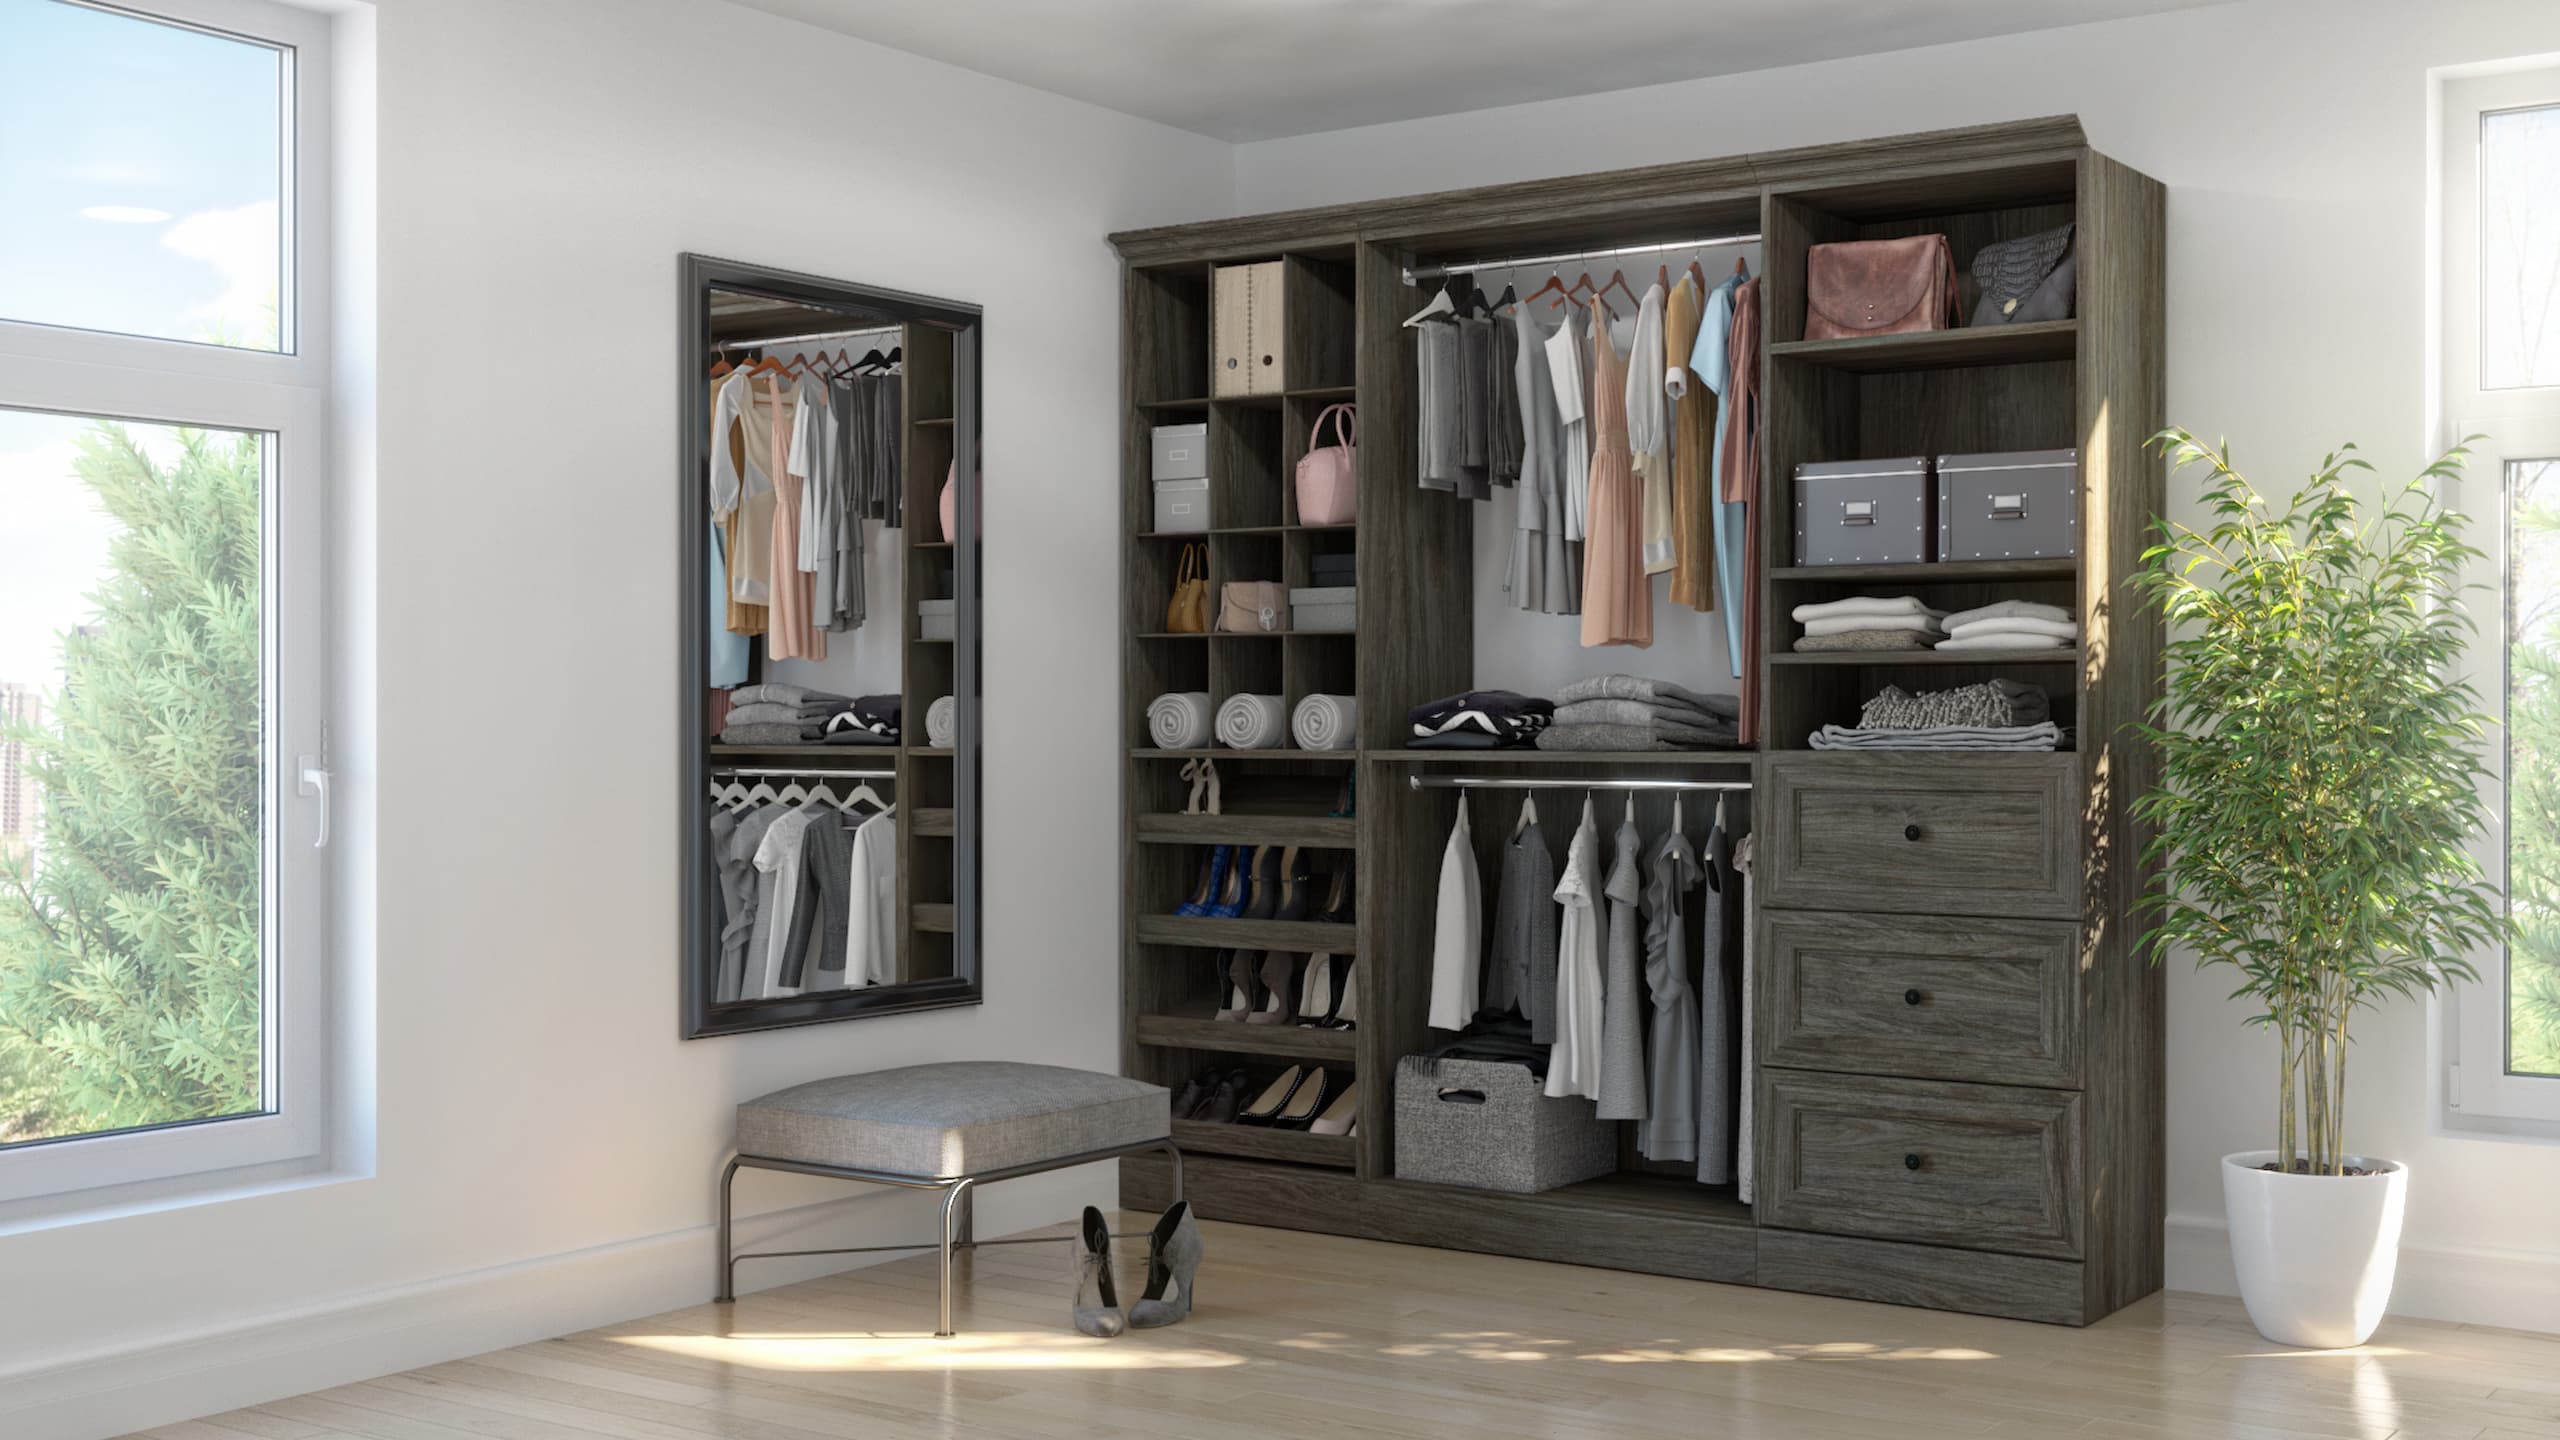 Bestar closet systems in a bright room